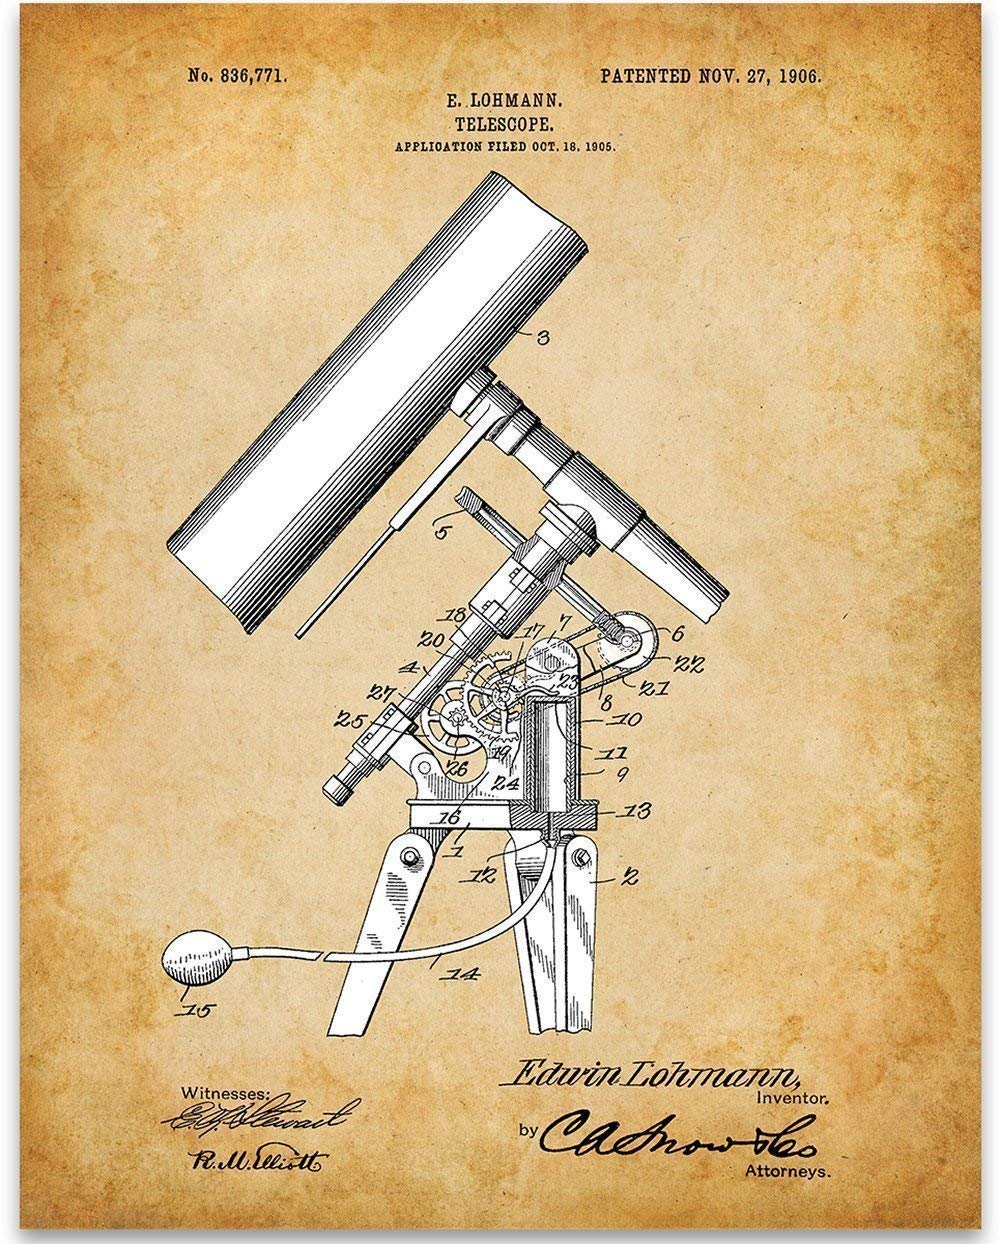 Antique Telescope on Equatorial Mount Patent - Great [...]